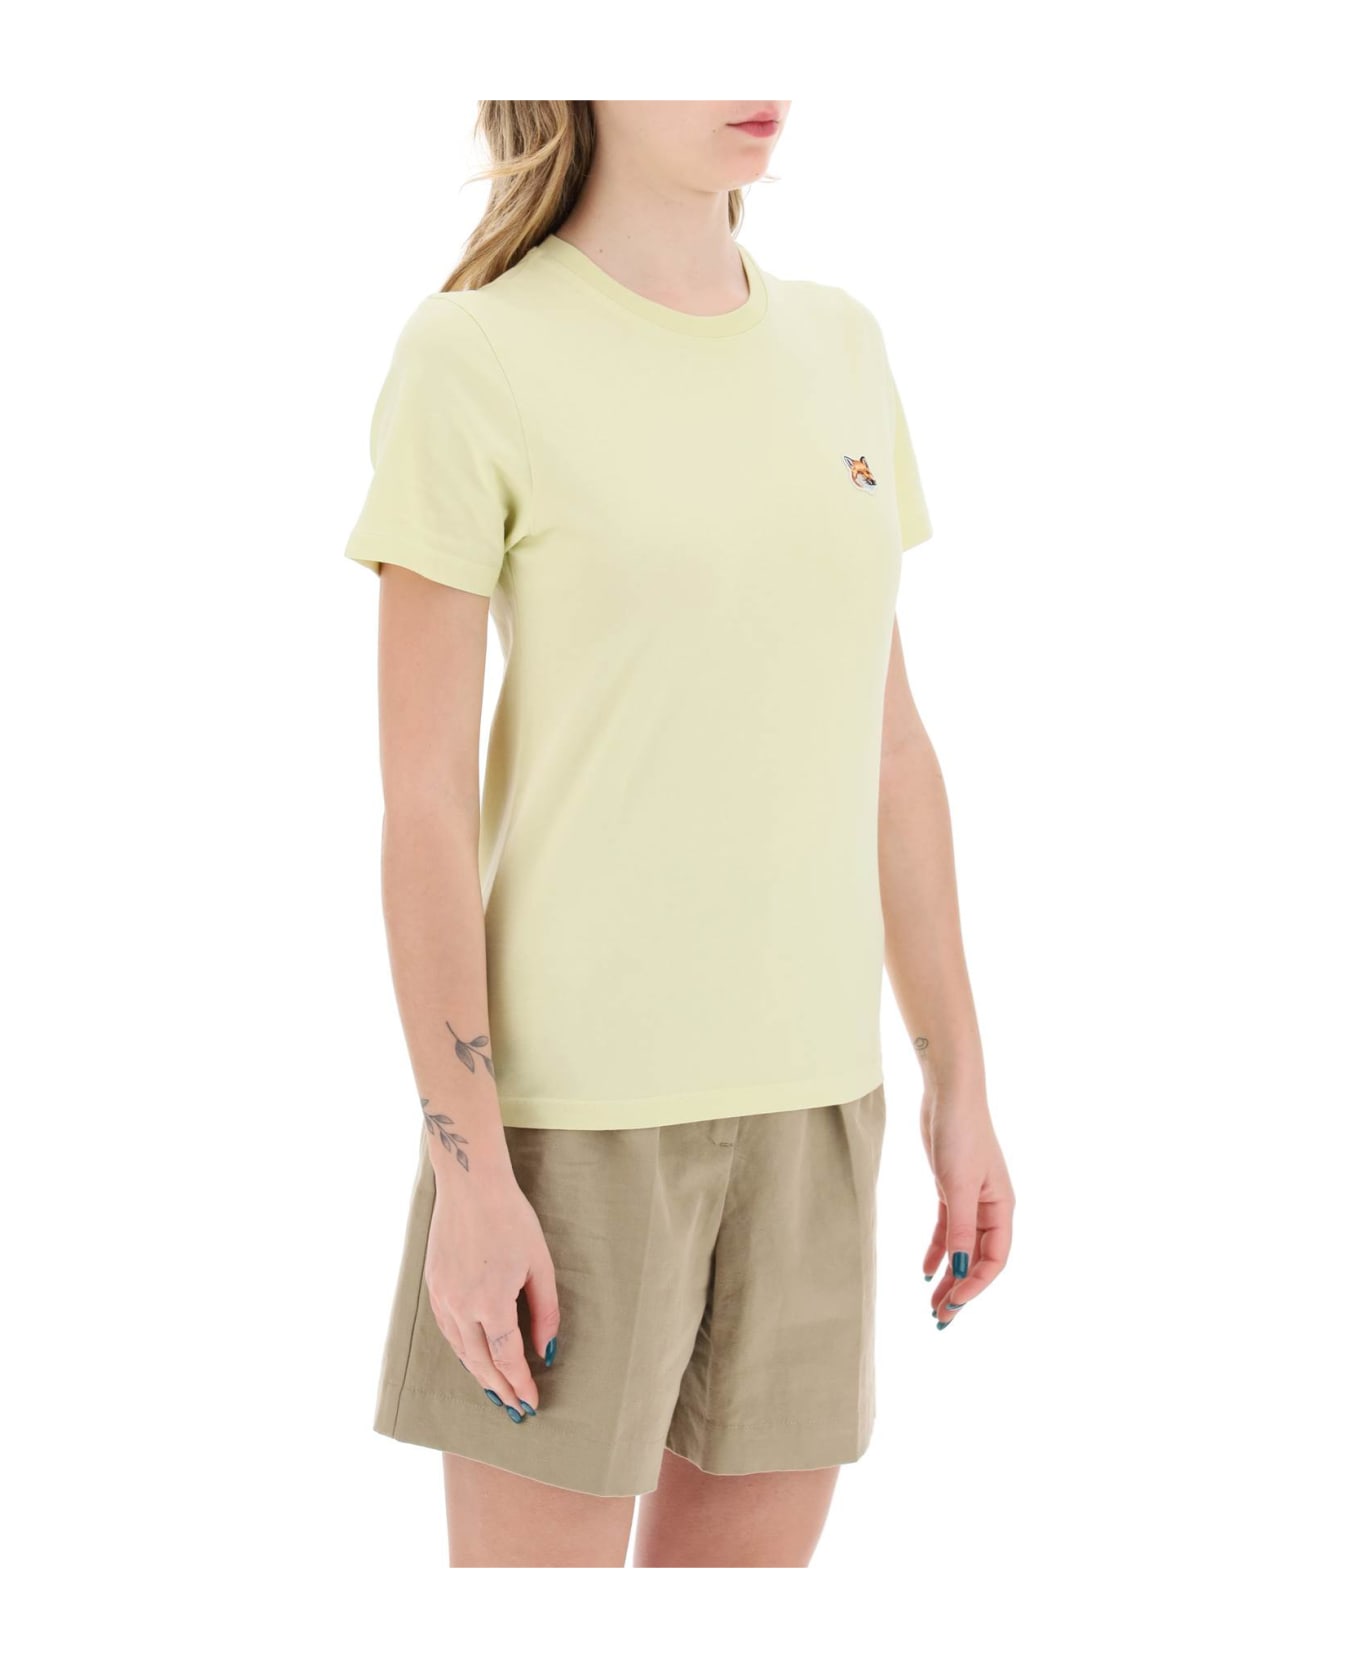 Maison Kitsuné Fox Head Crew-neck T-shirt - CHALK YELLOW (Yellow)